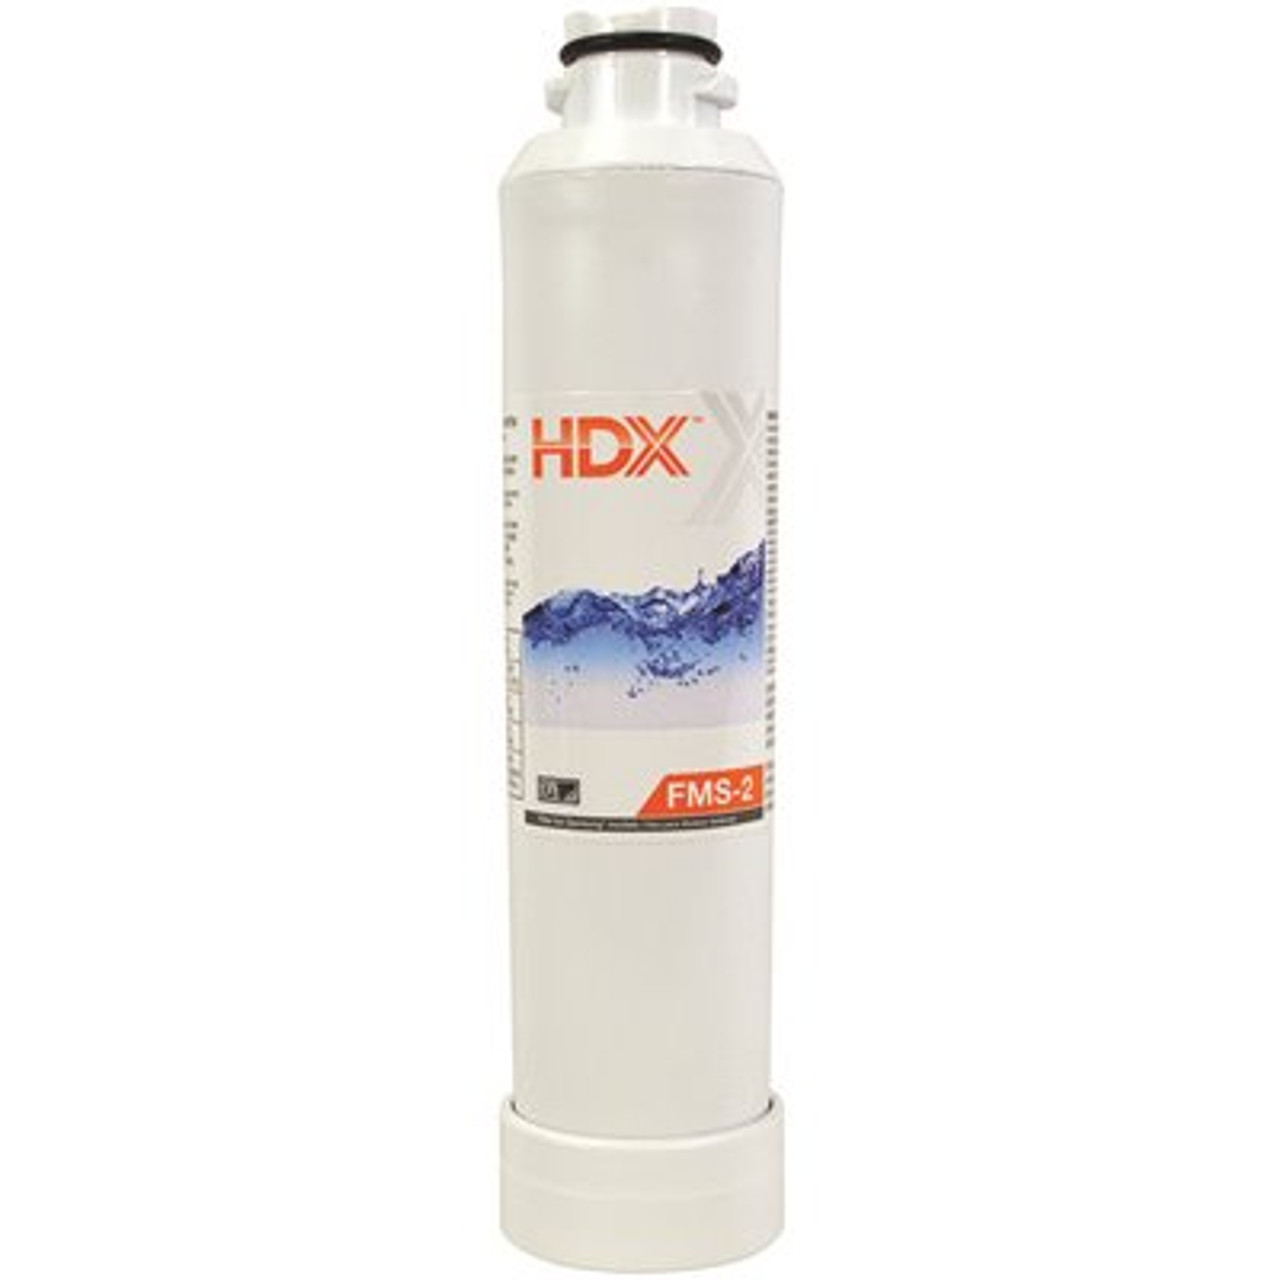 Hdx Fms-2 Premium Refrigerator Replacement Filter Fits Samsung Haf-Cins